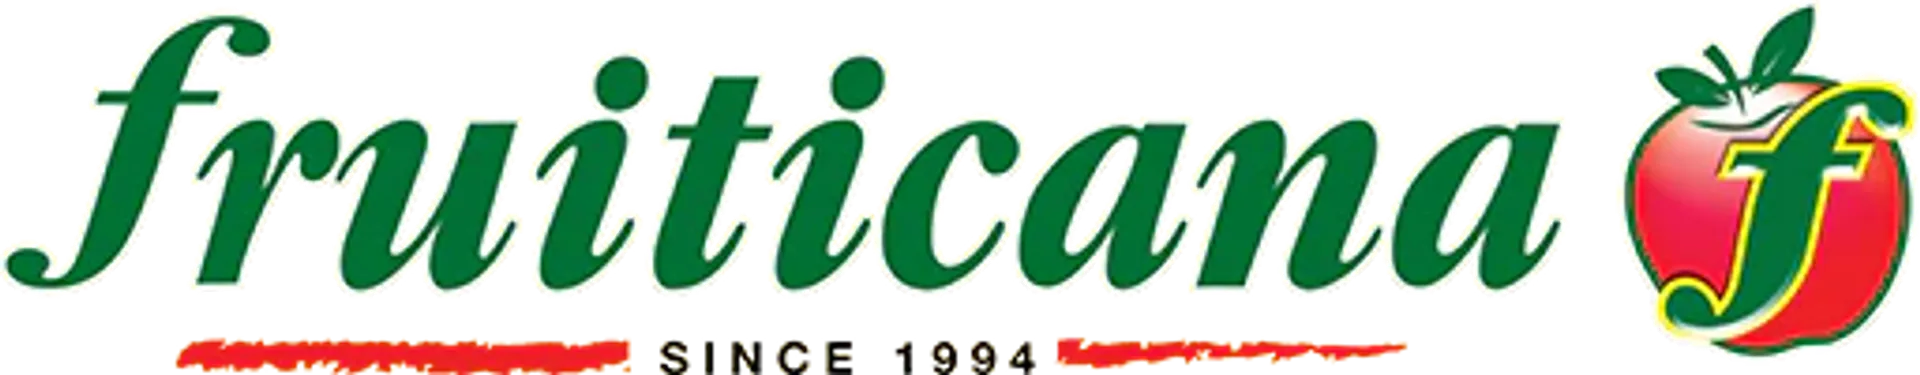 FRUITICANA logo